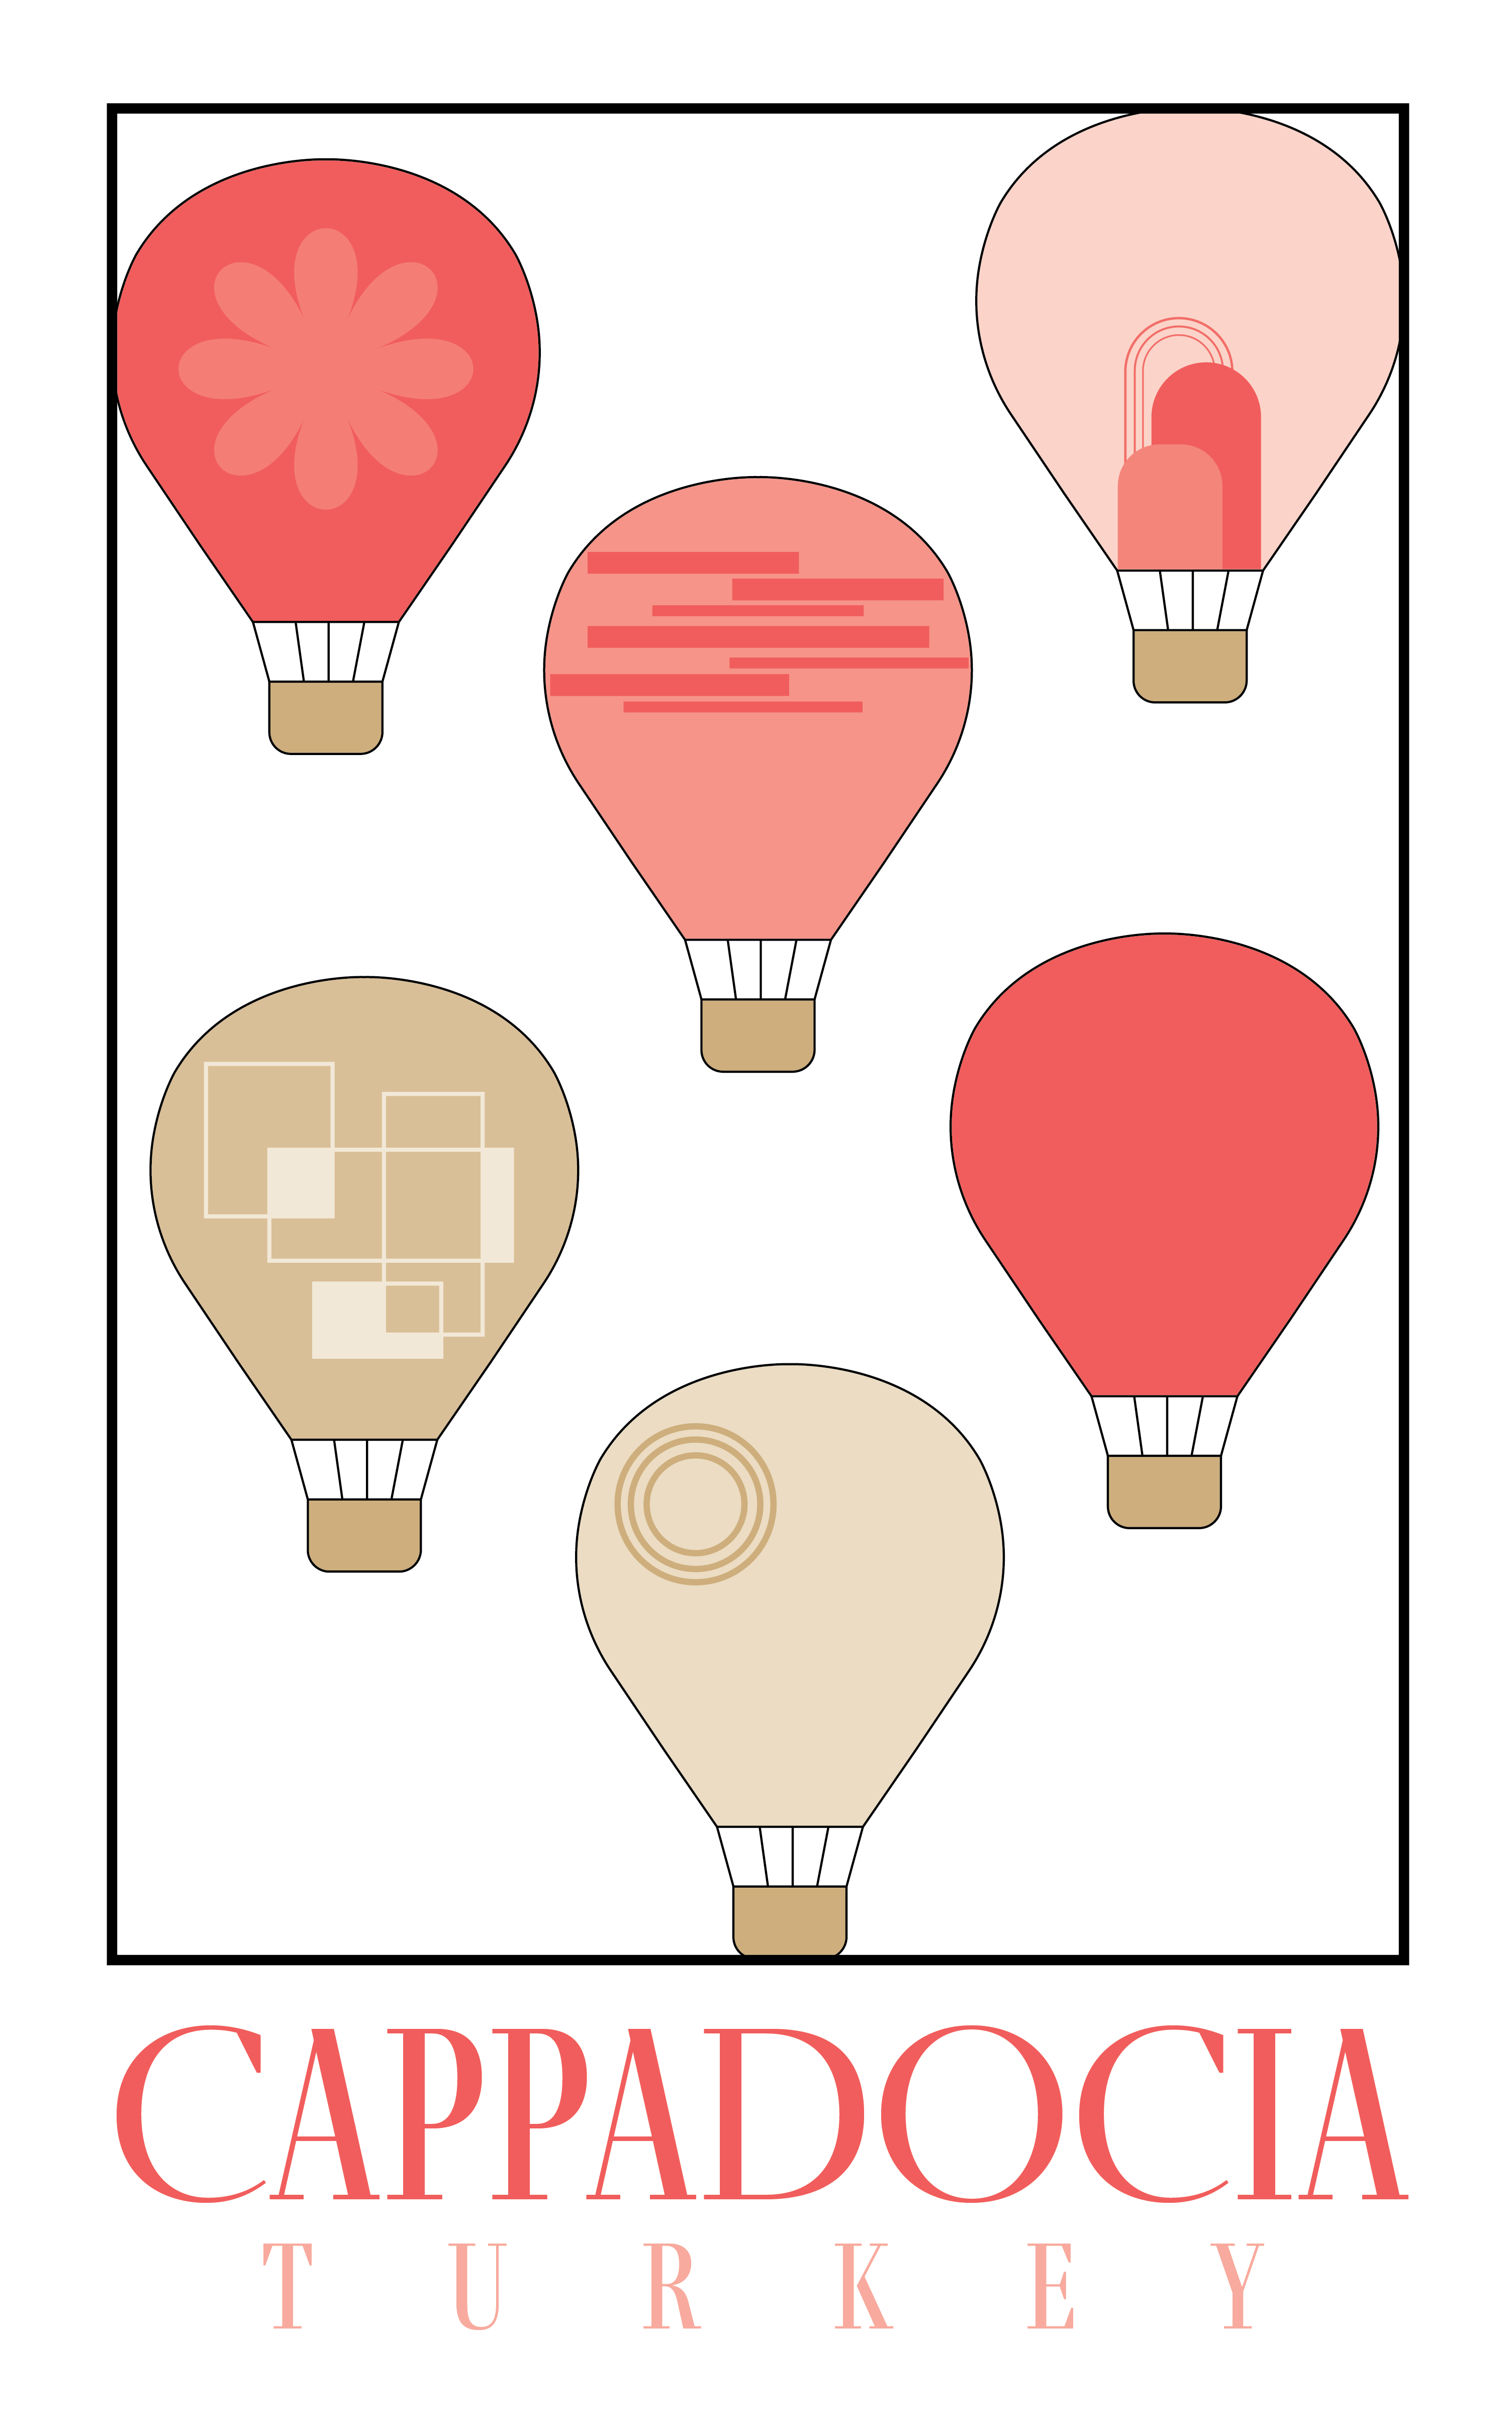 travel poster with cartoon hot air balloons and the caption 'Cappadocia, Turkey'